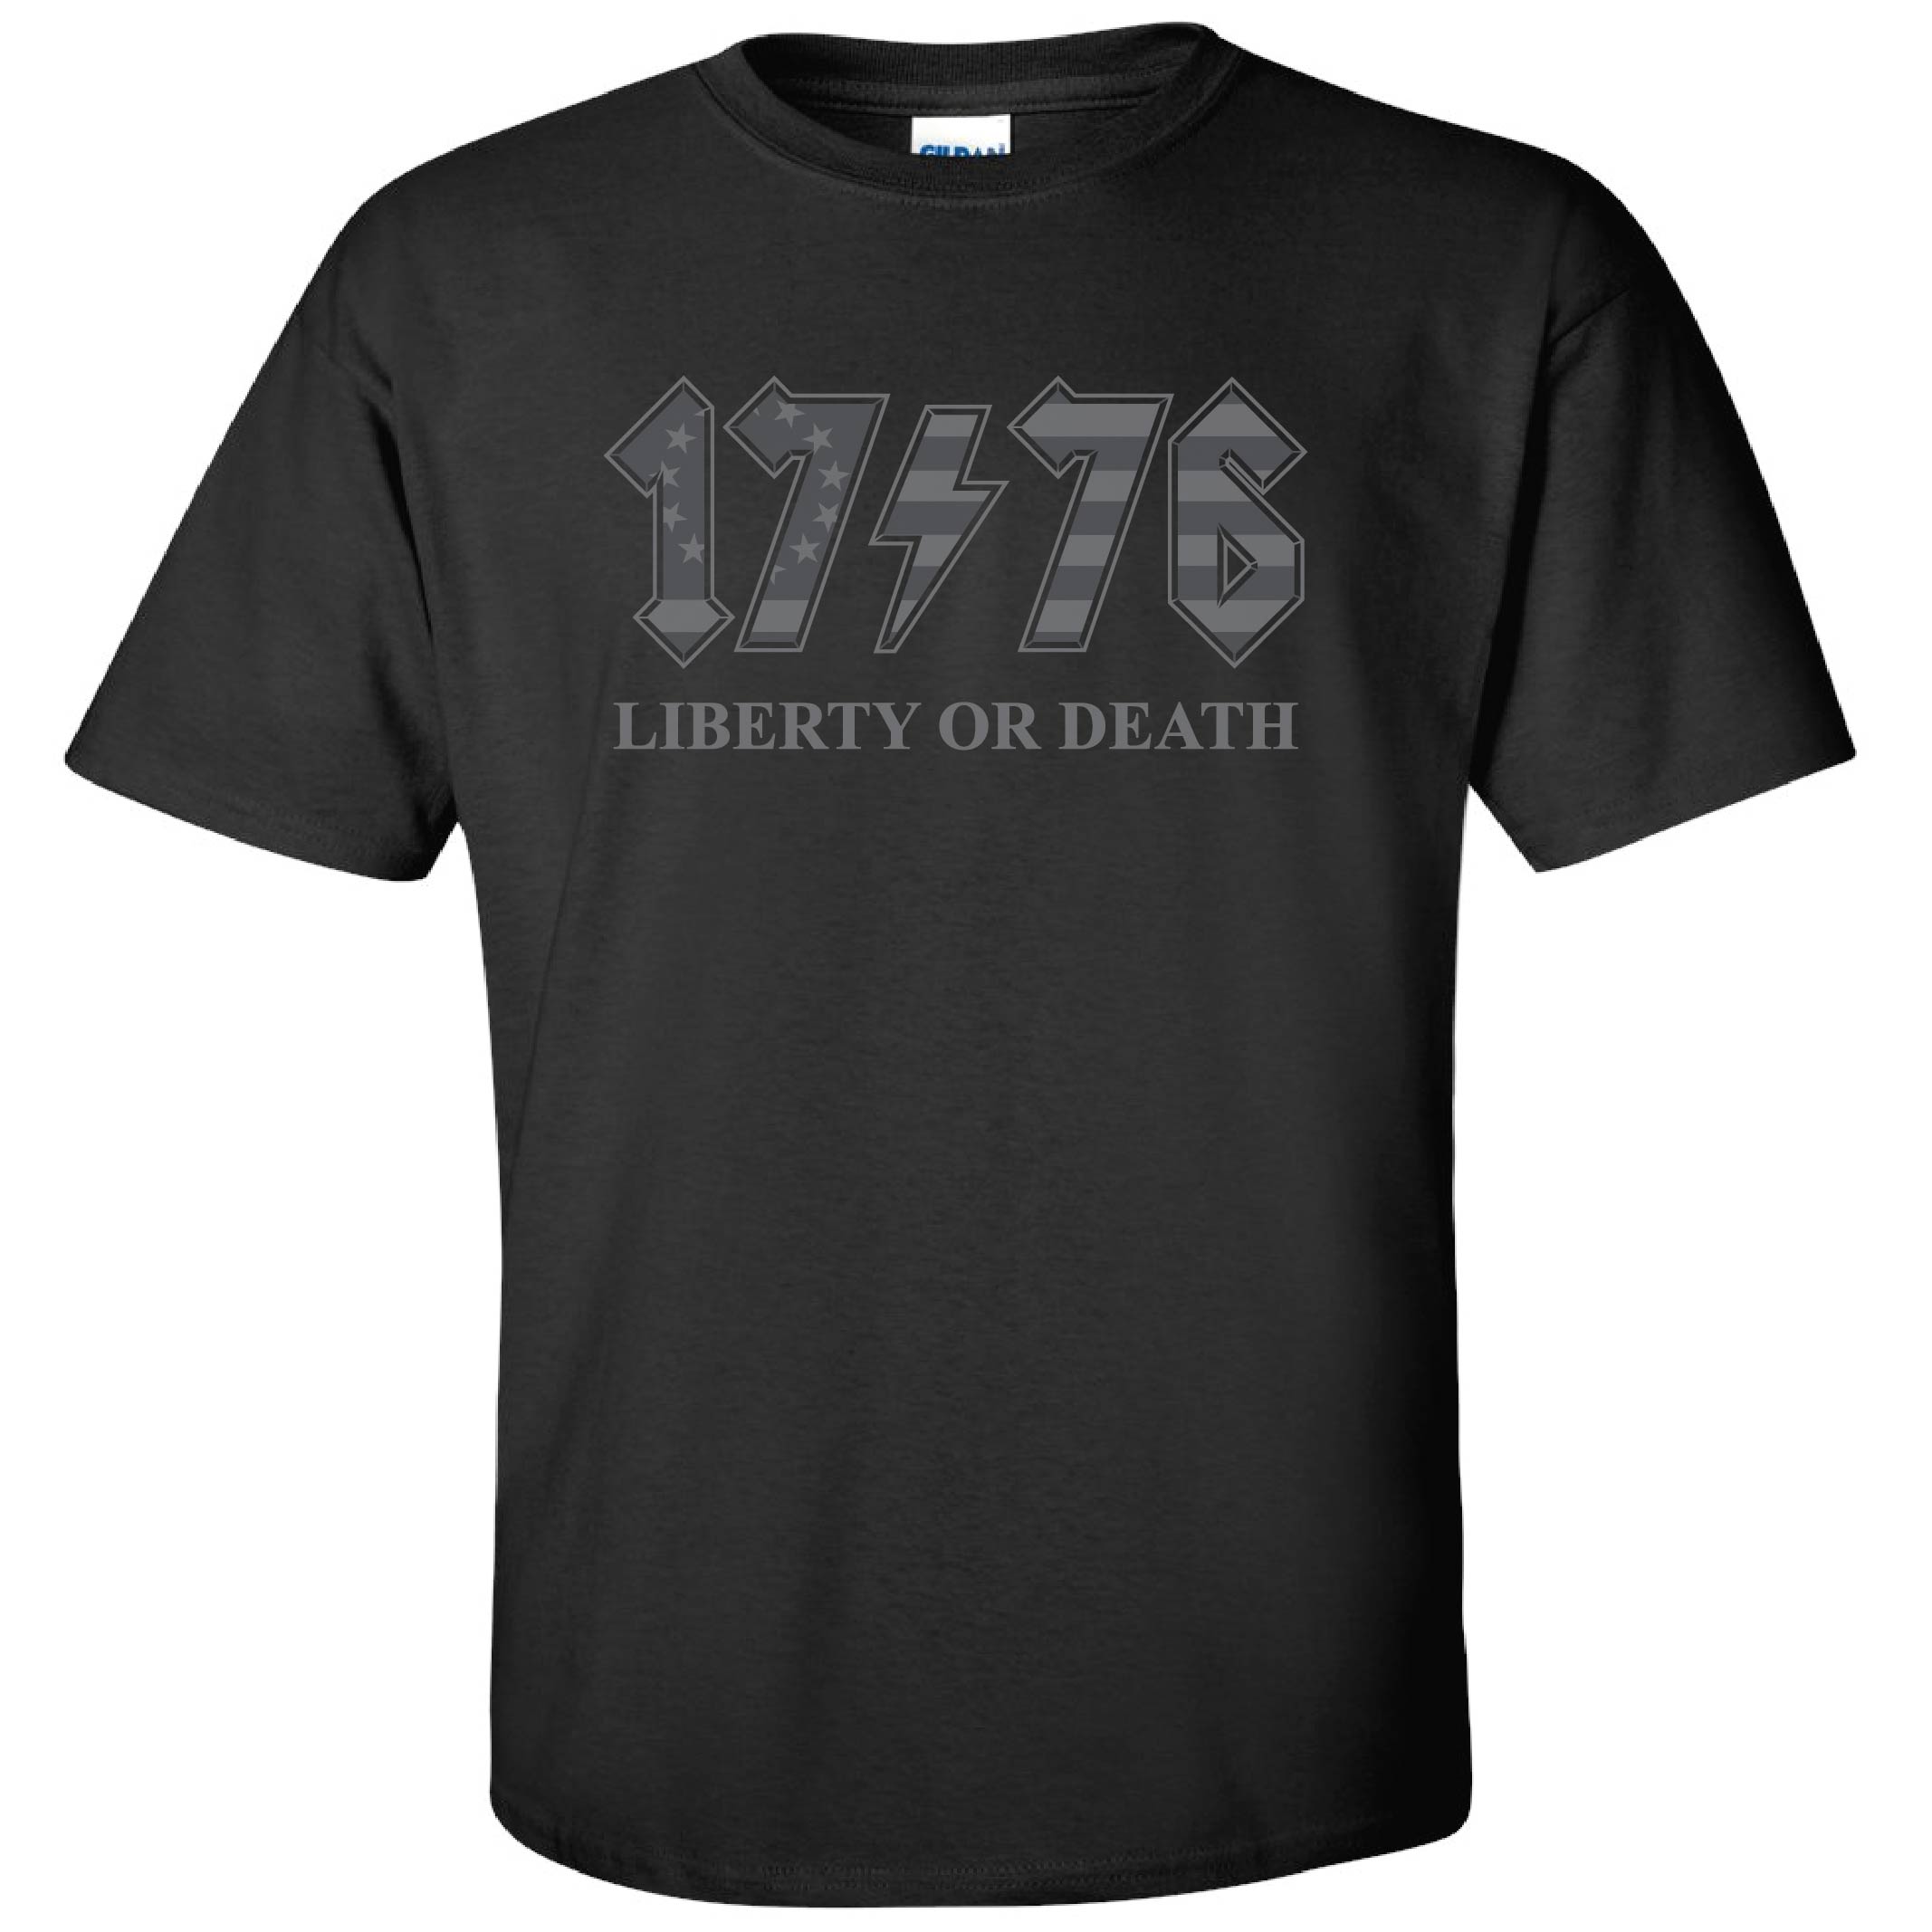 Liberty Or Death "1776" Rocker   T-Shirt